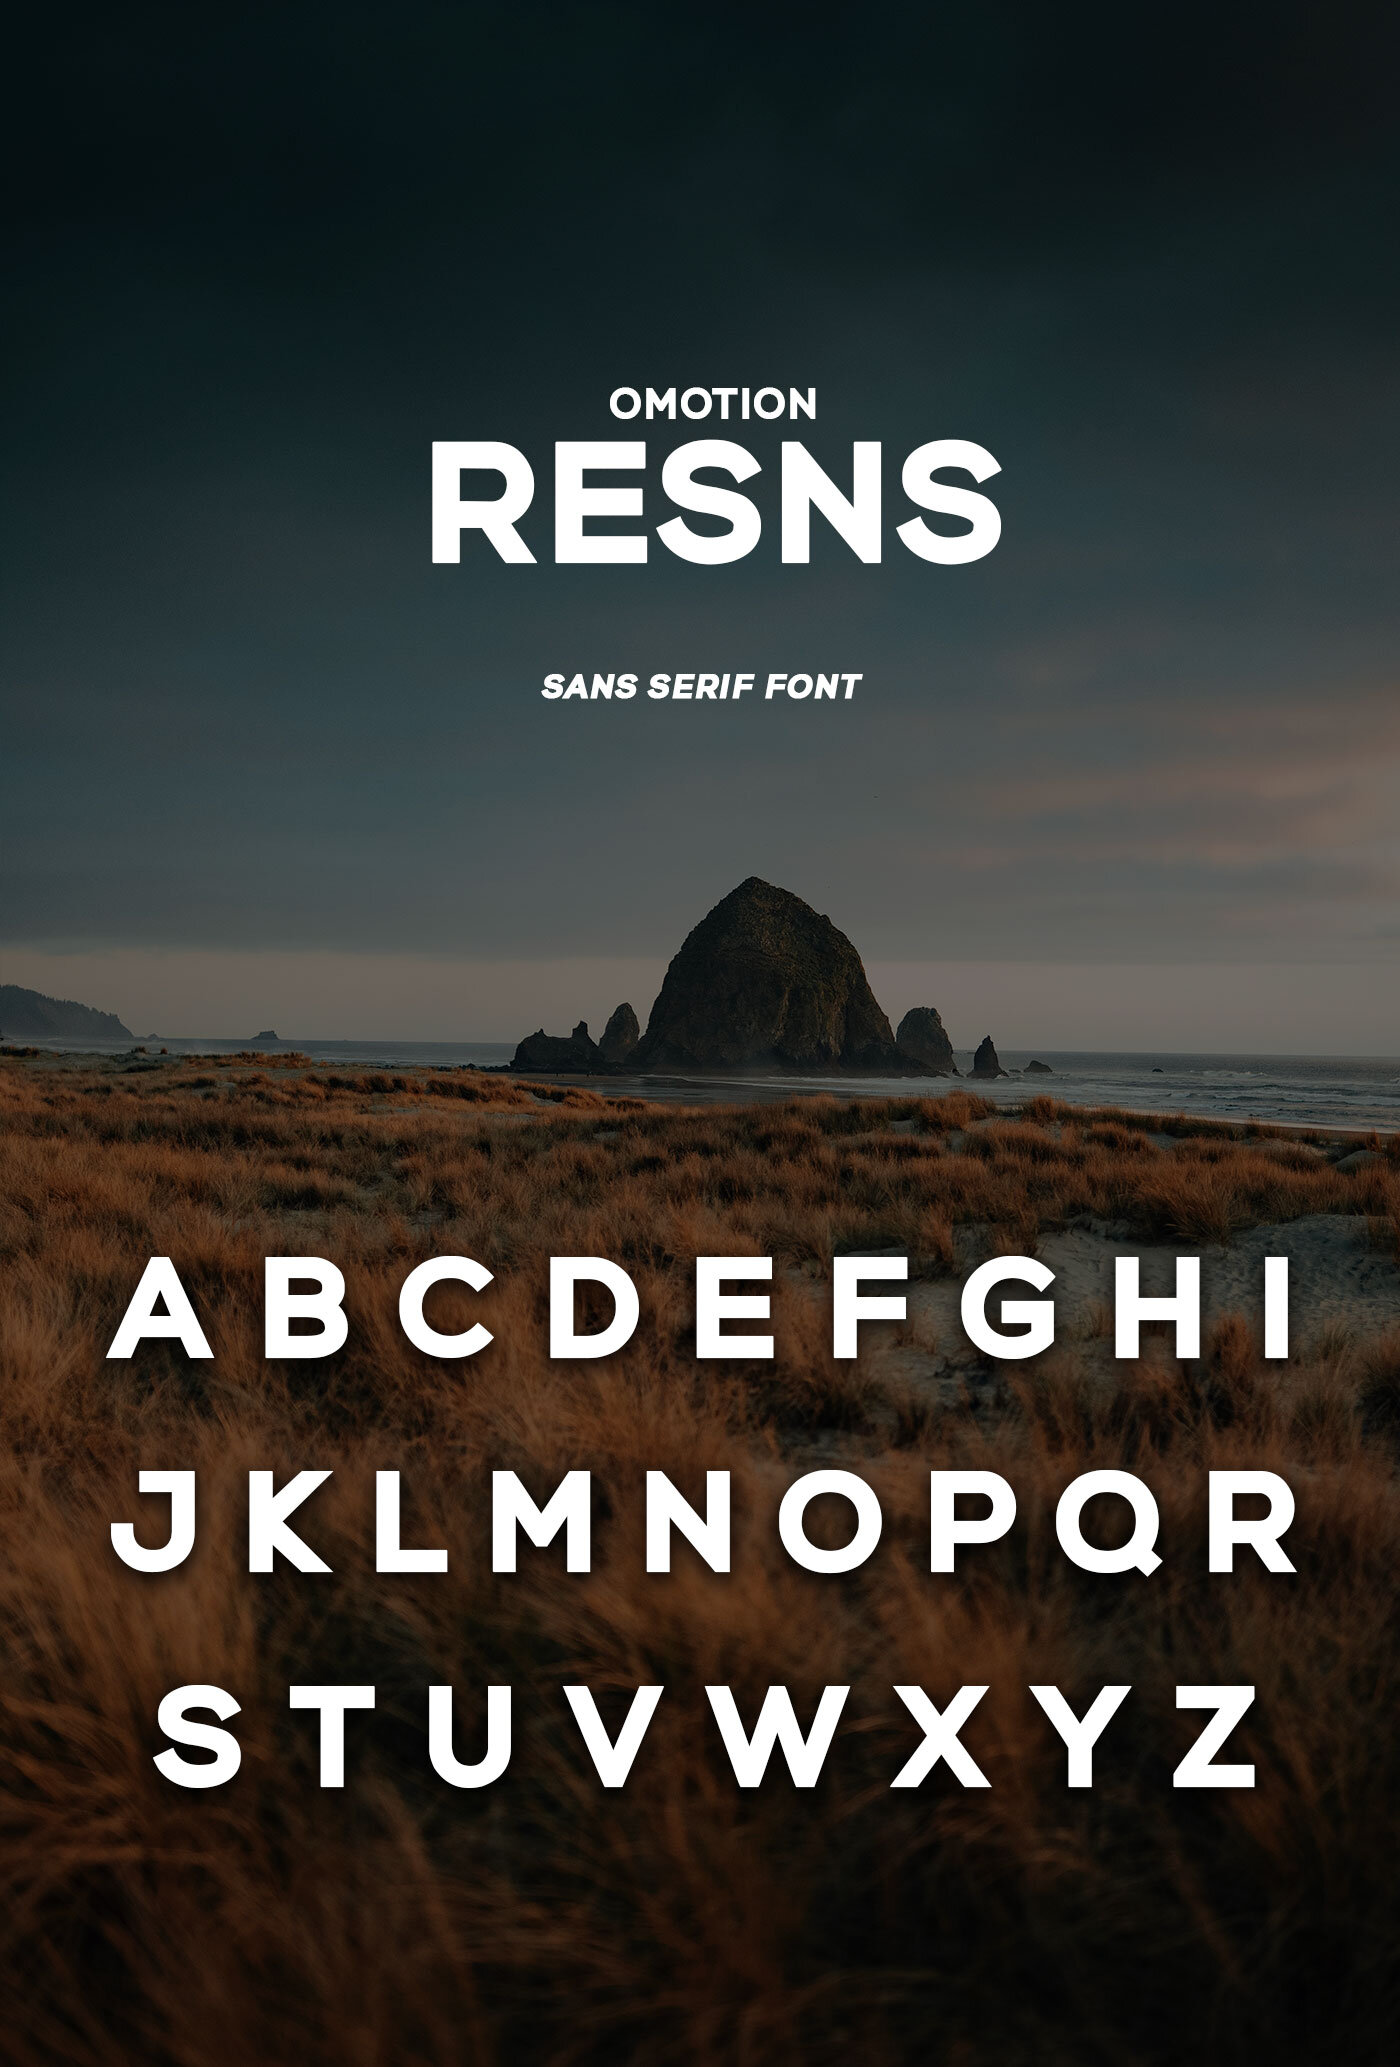 omotion Resns Free Sans Serif Font